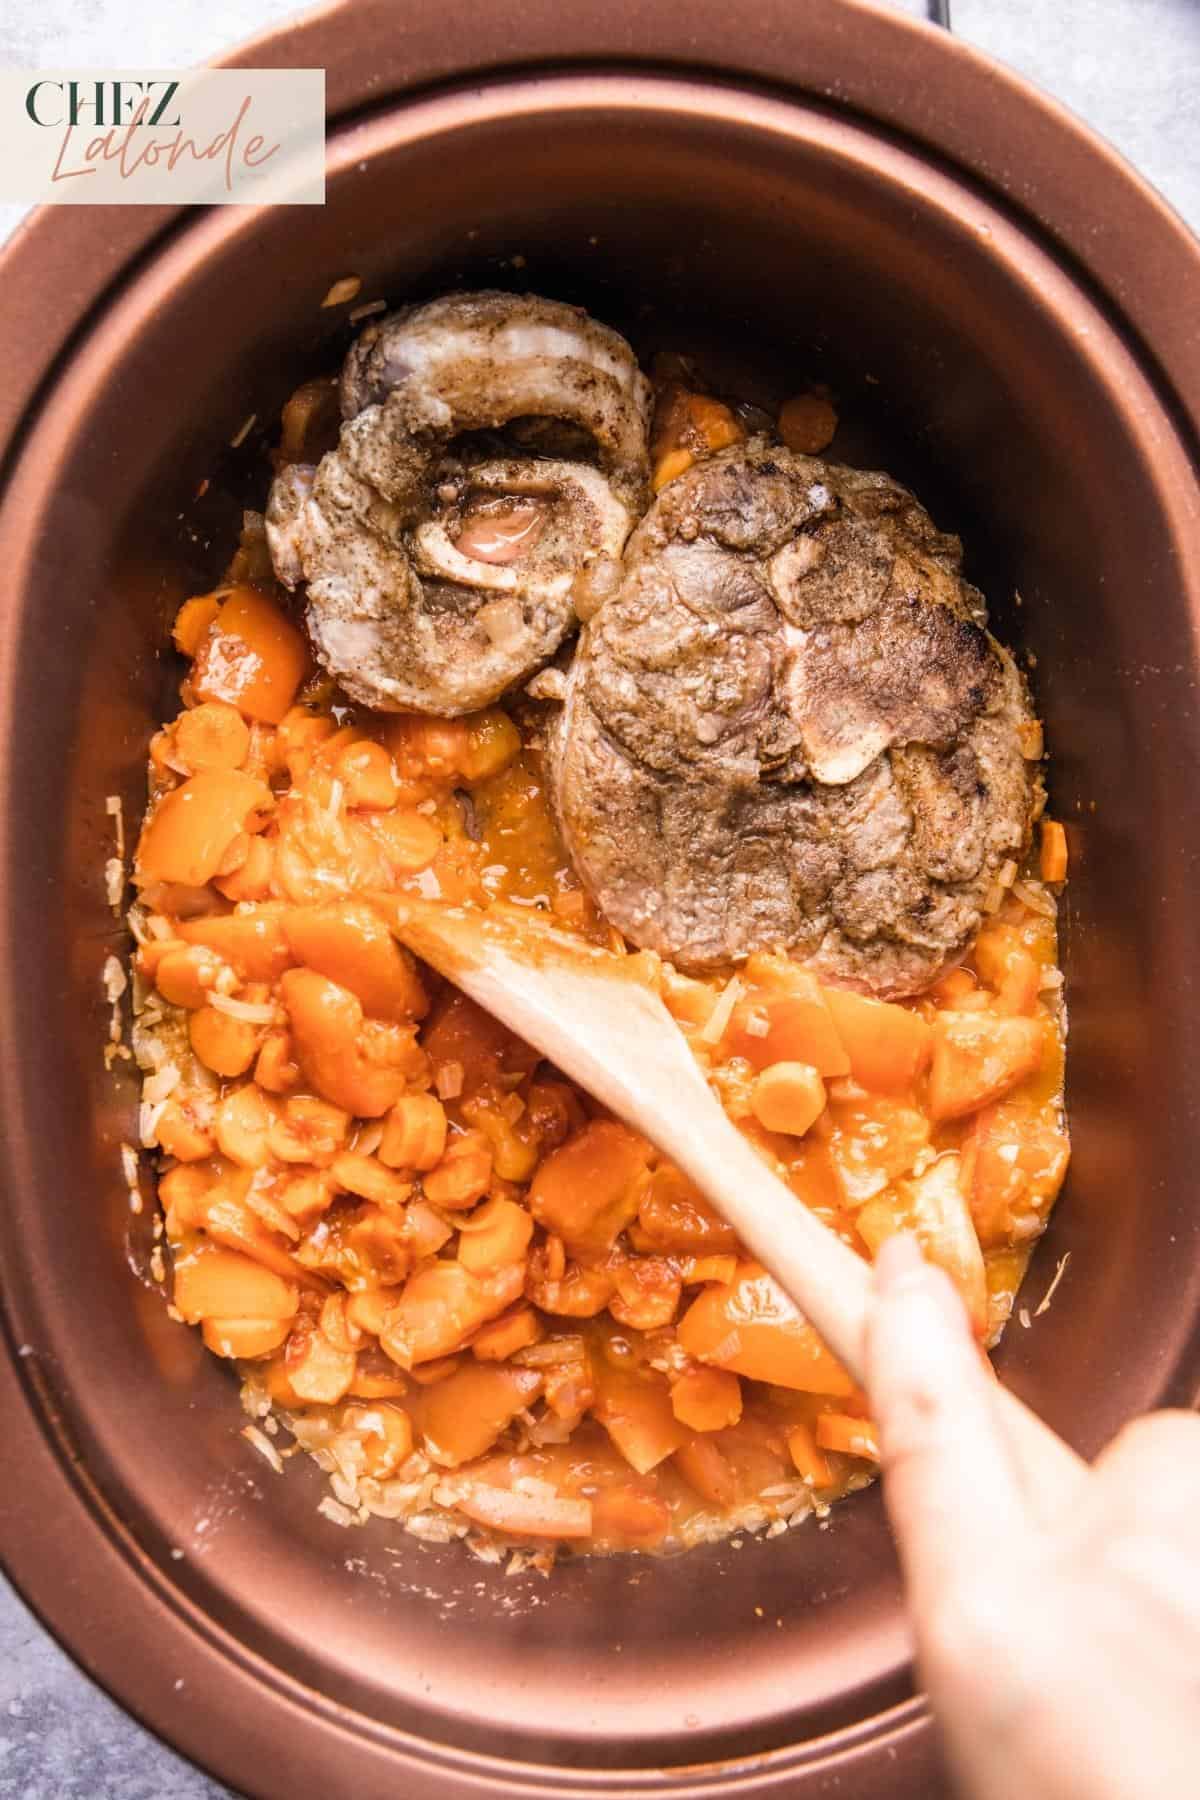 Place the seared beef shanks back into the pot alongside the sautéed mirepoix.